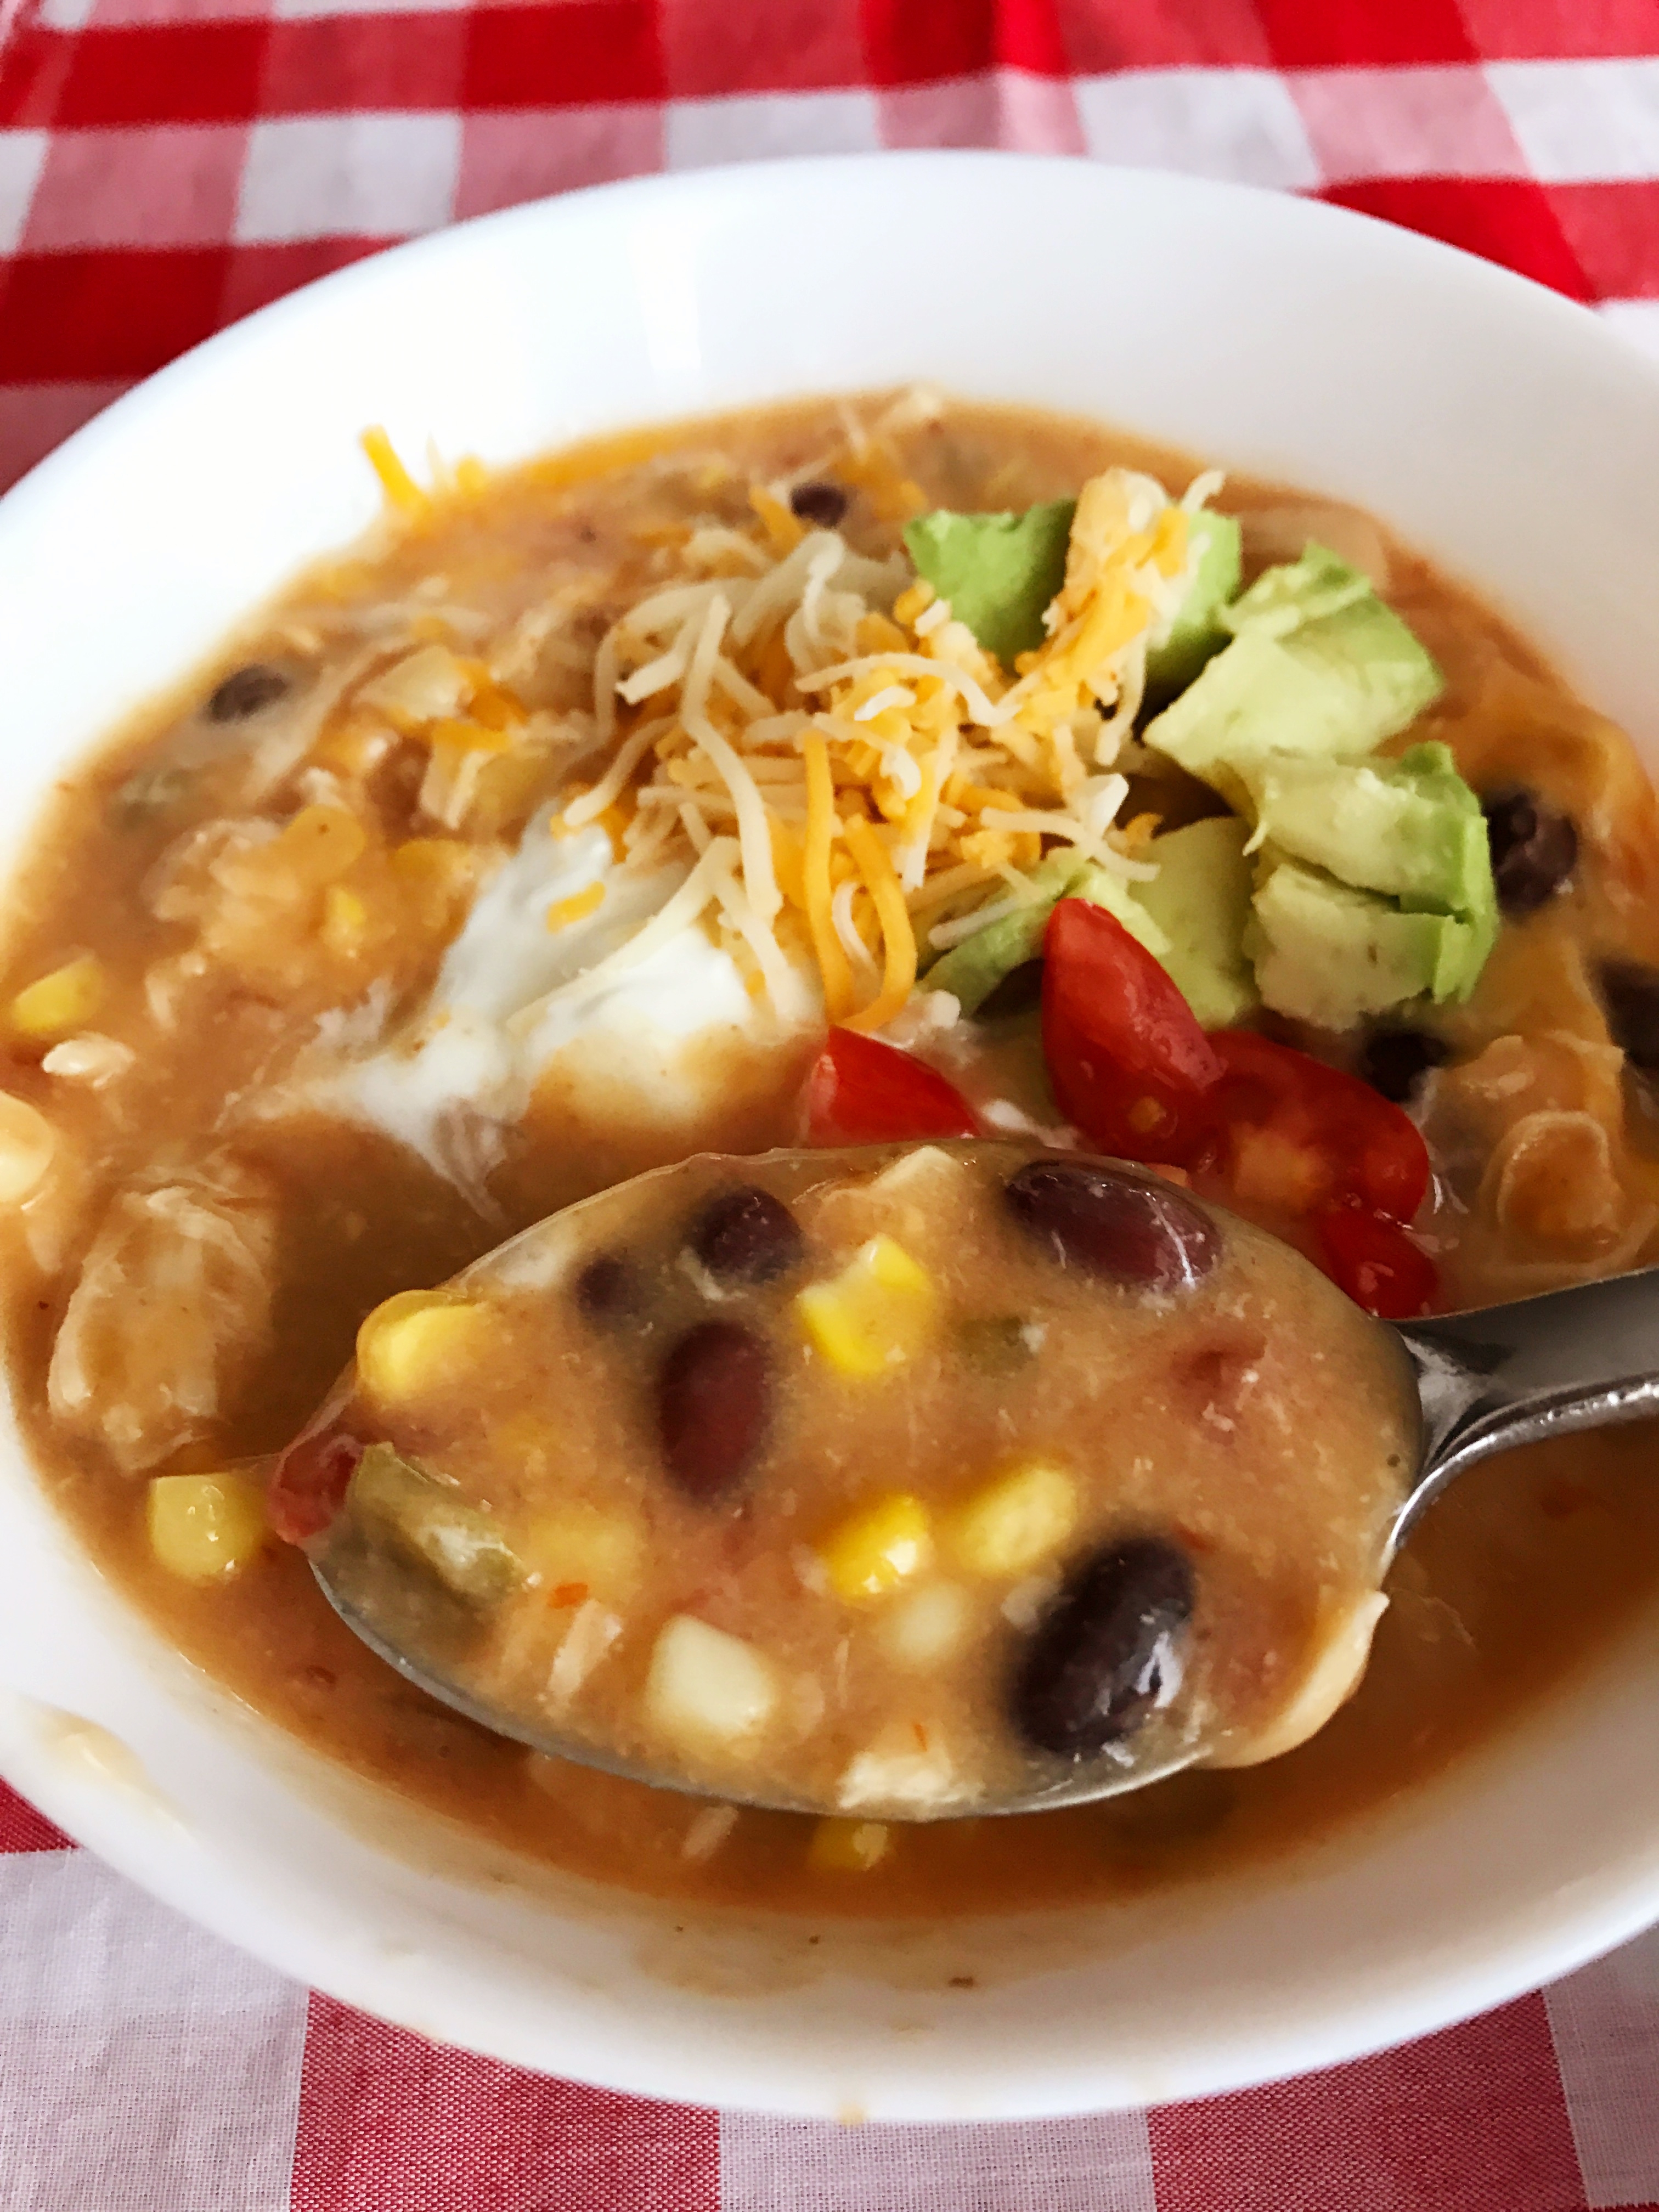 Chicken Fajita Soup